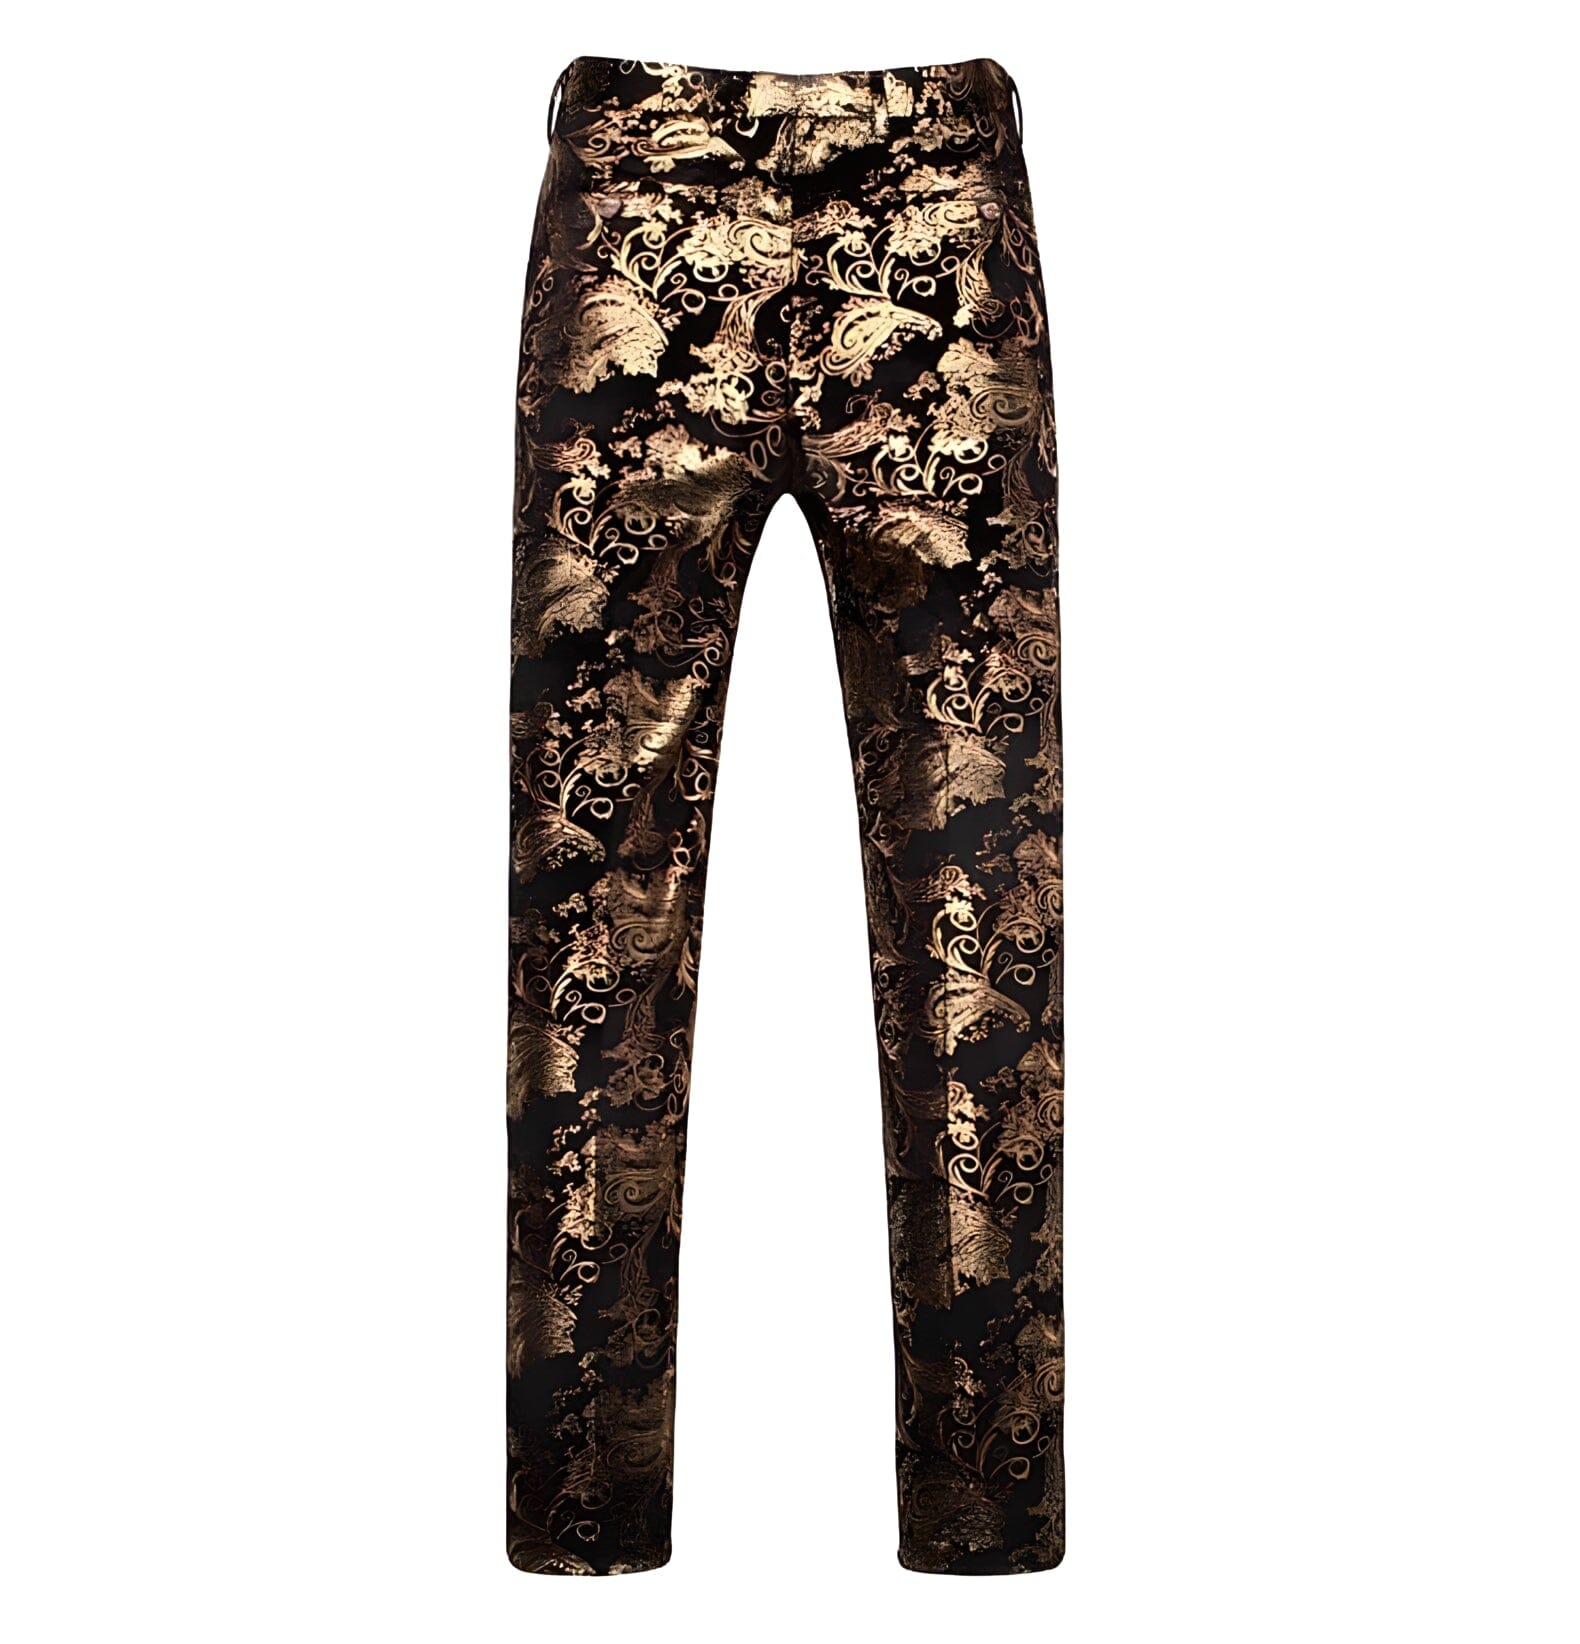 The Davide Slim Fit Dress Suit Pants Trousers - Multiple Colors WD Styles Gold XS 